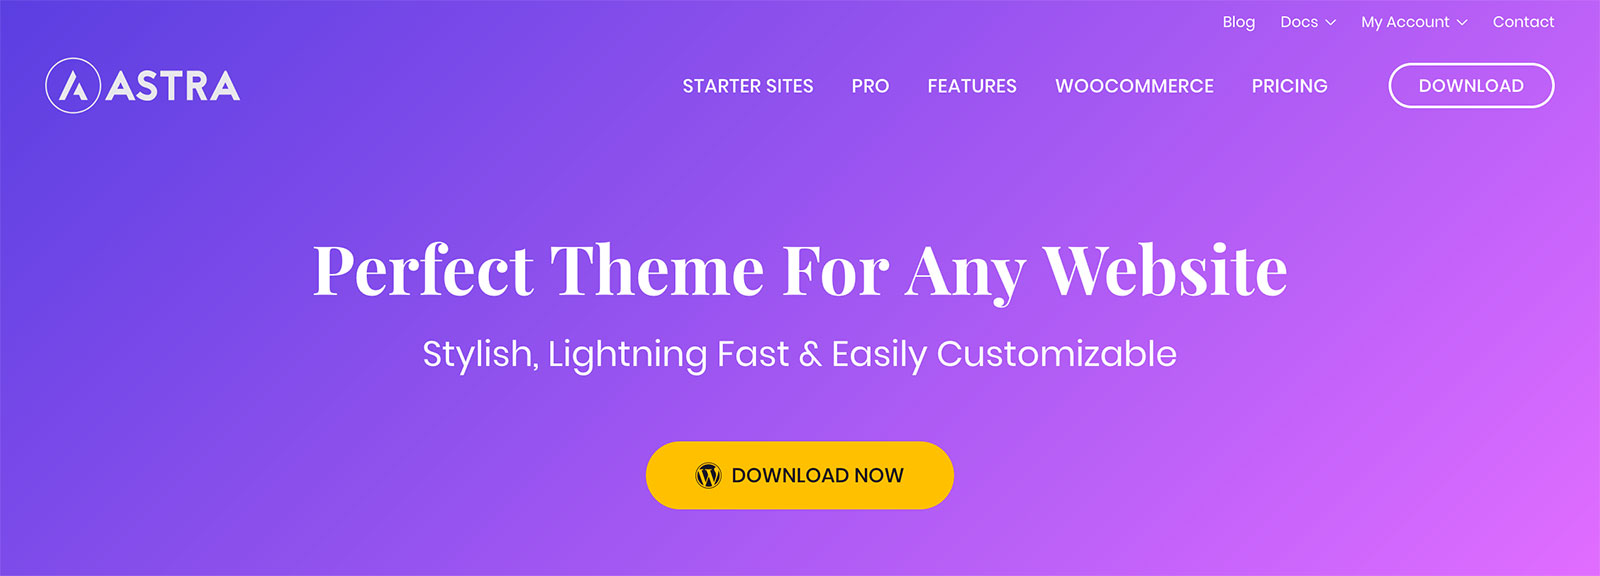 Astra WordPress Theme - Homepage